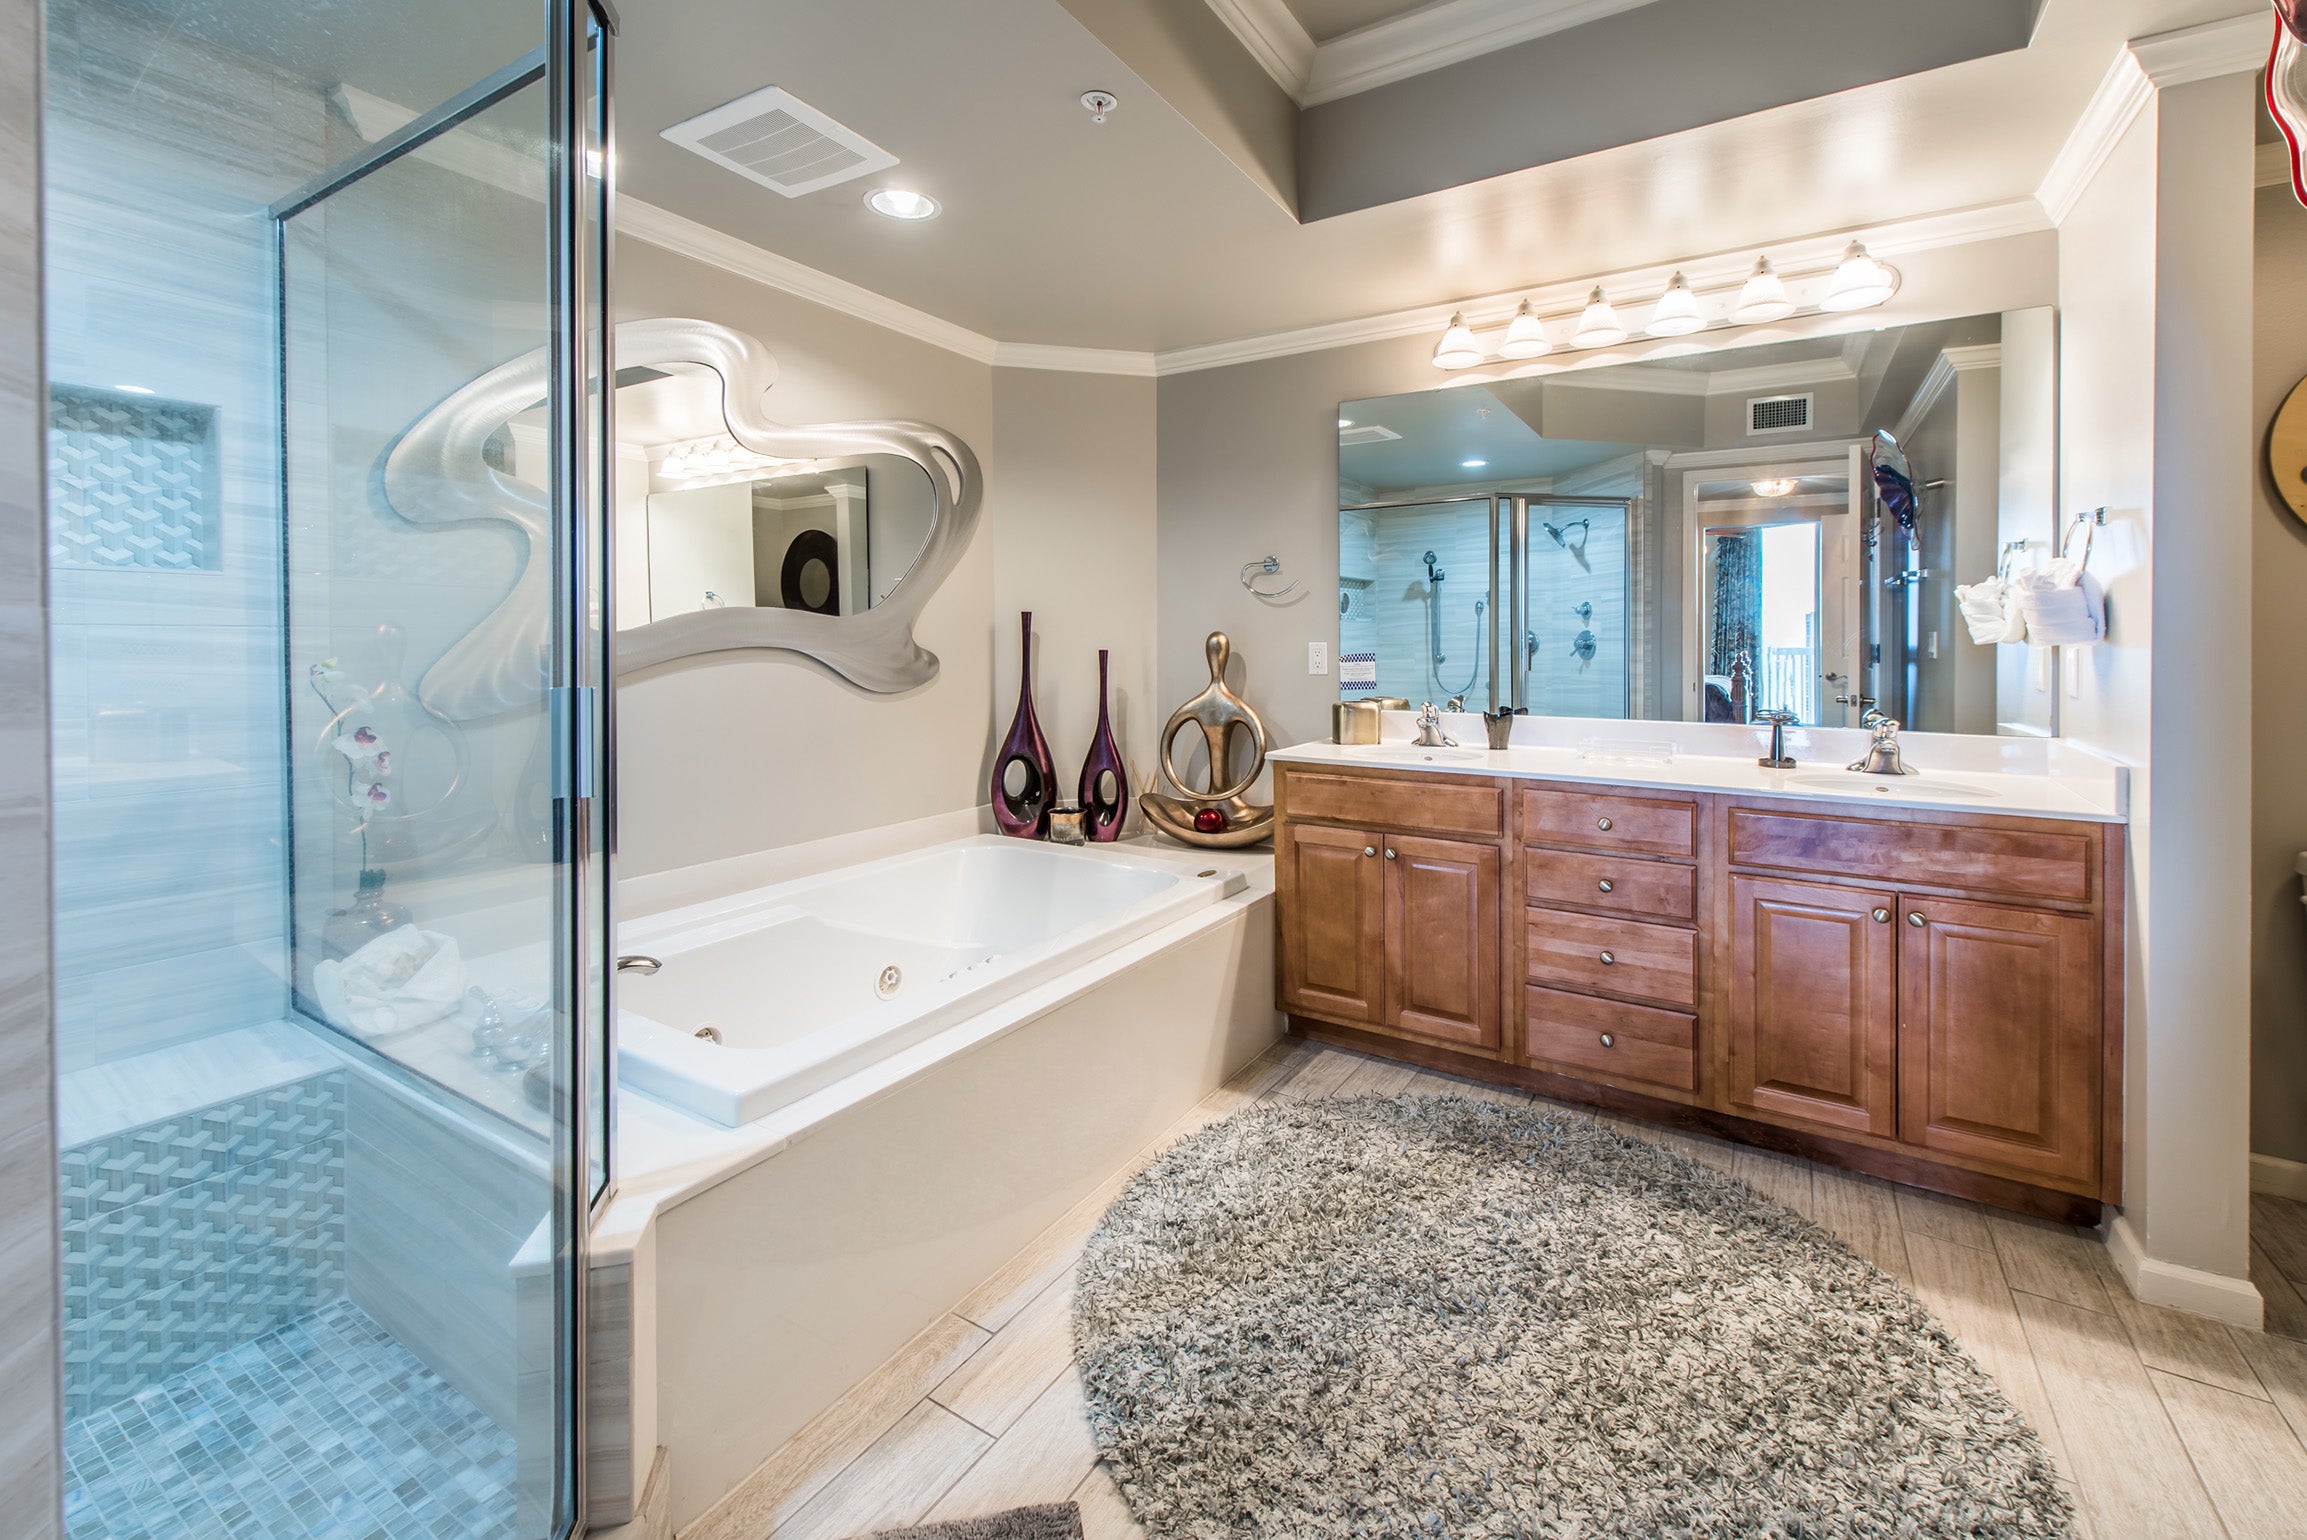 Dual sinks, soaking tub, seat in shower - wow!